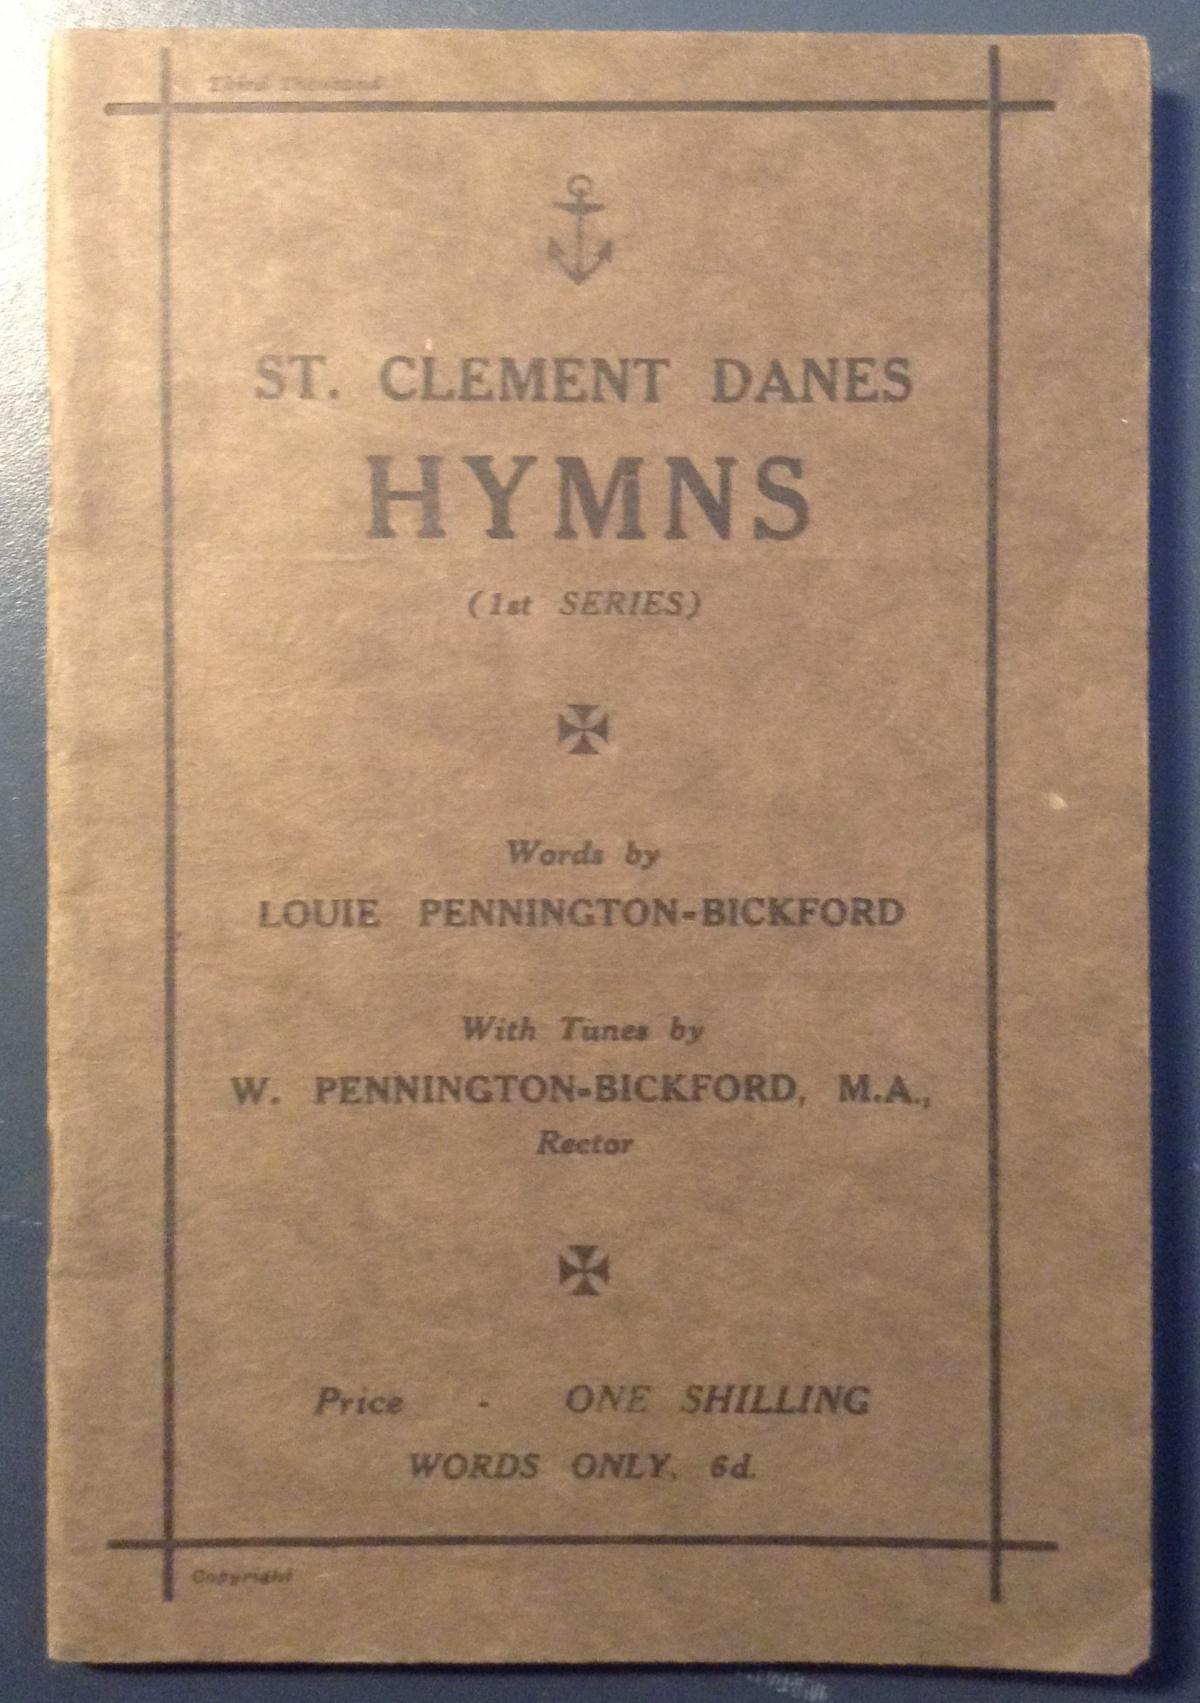 St Clement Danes - more